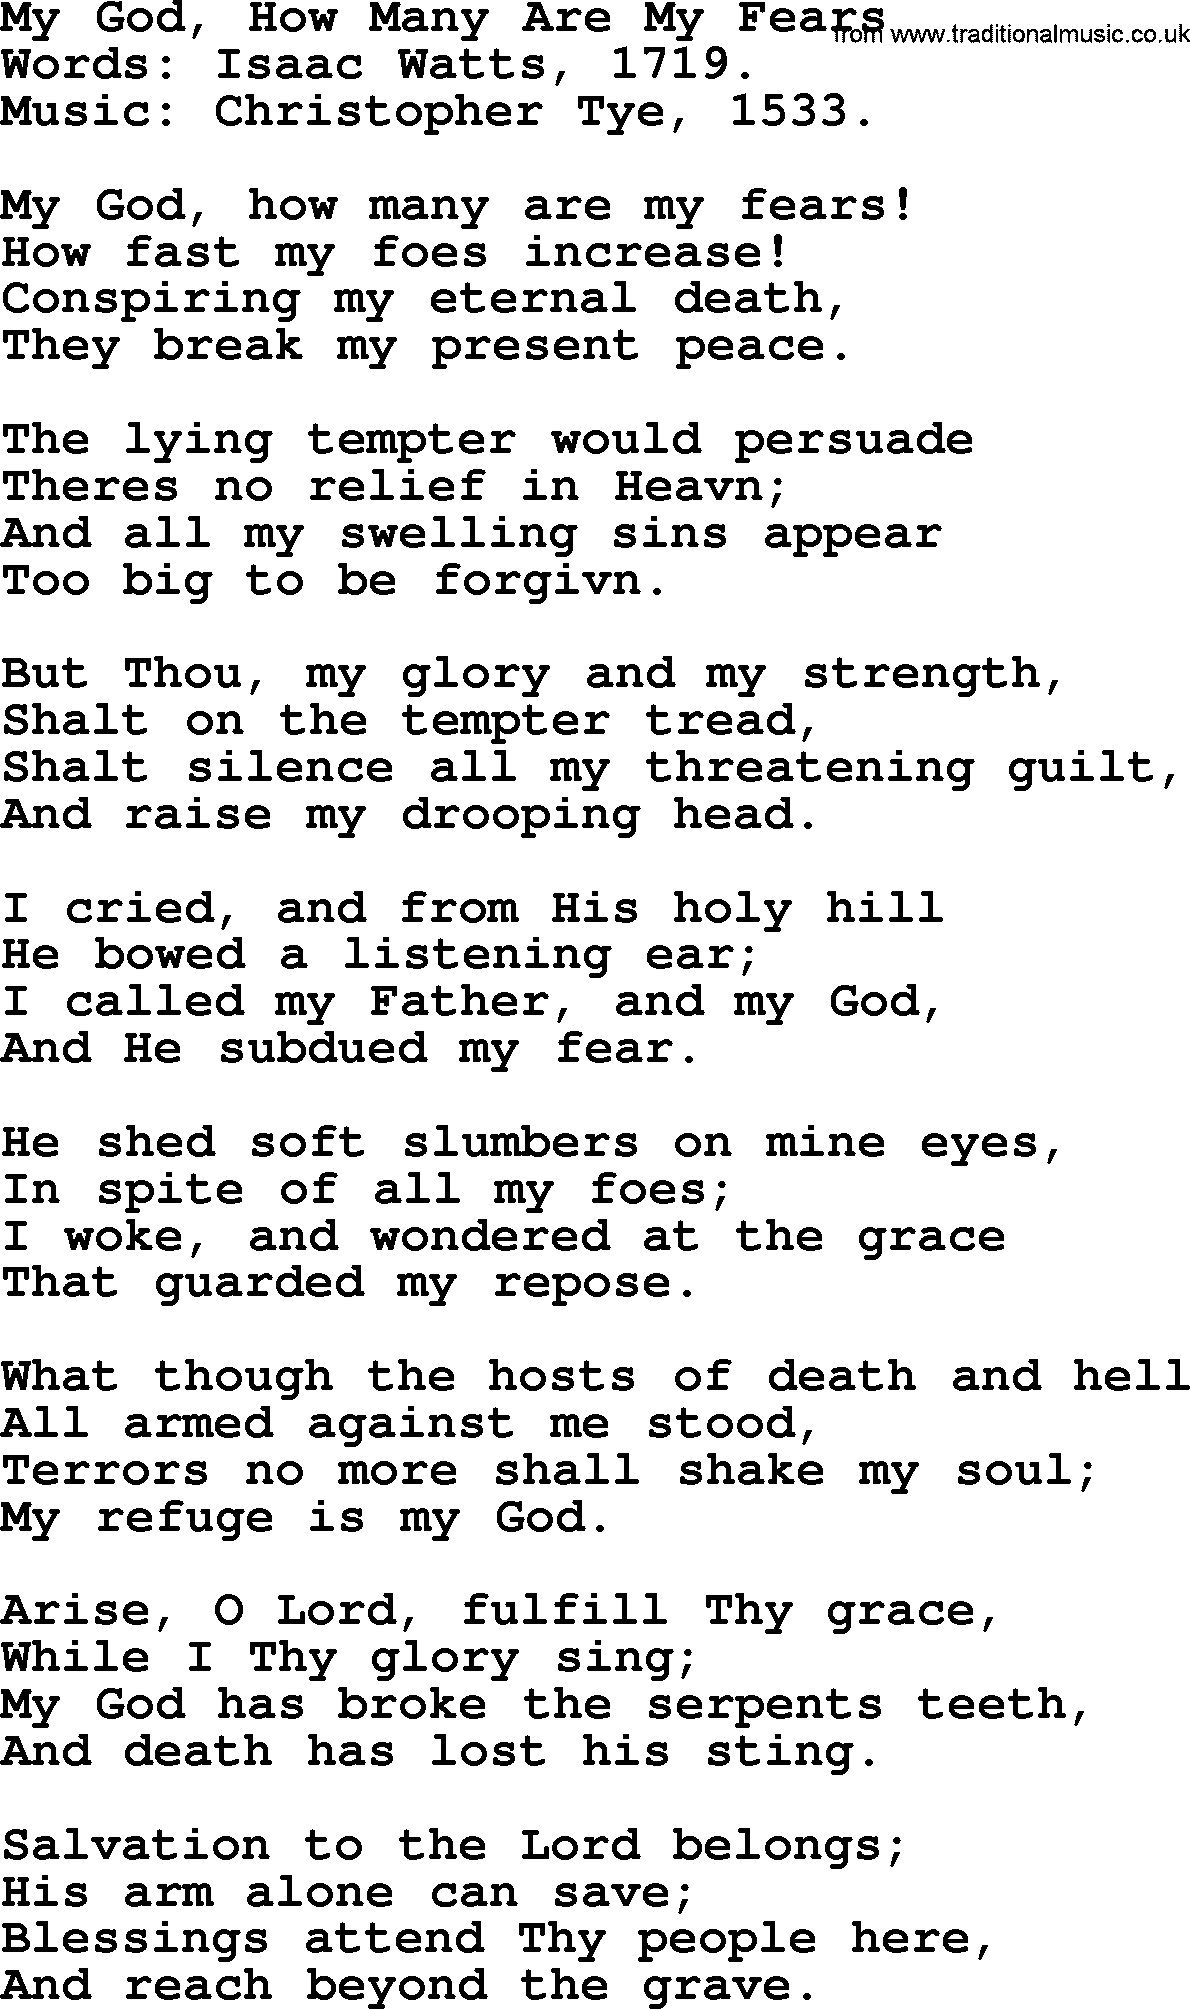 Isaac Watts Christian hymn: My God, How Many Are My Fears- lyricss